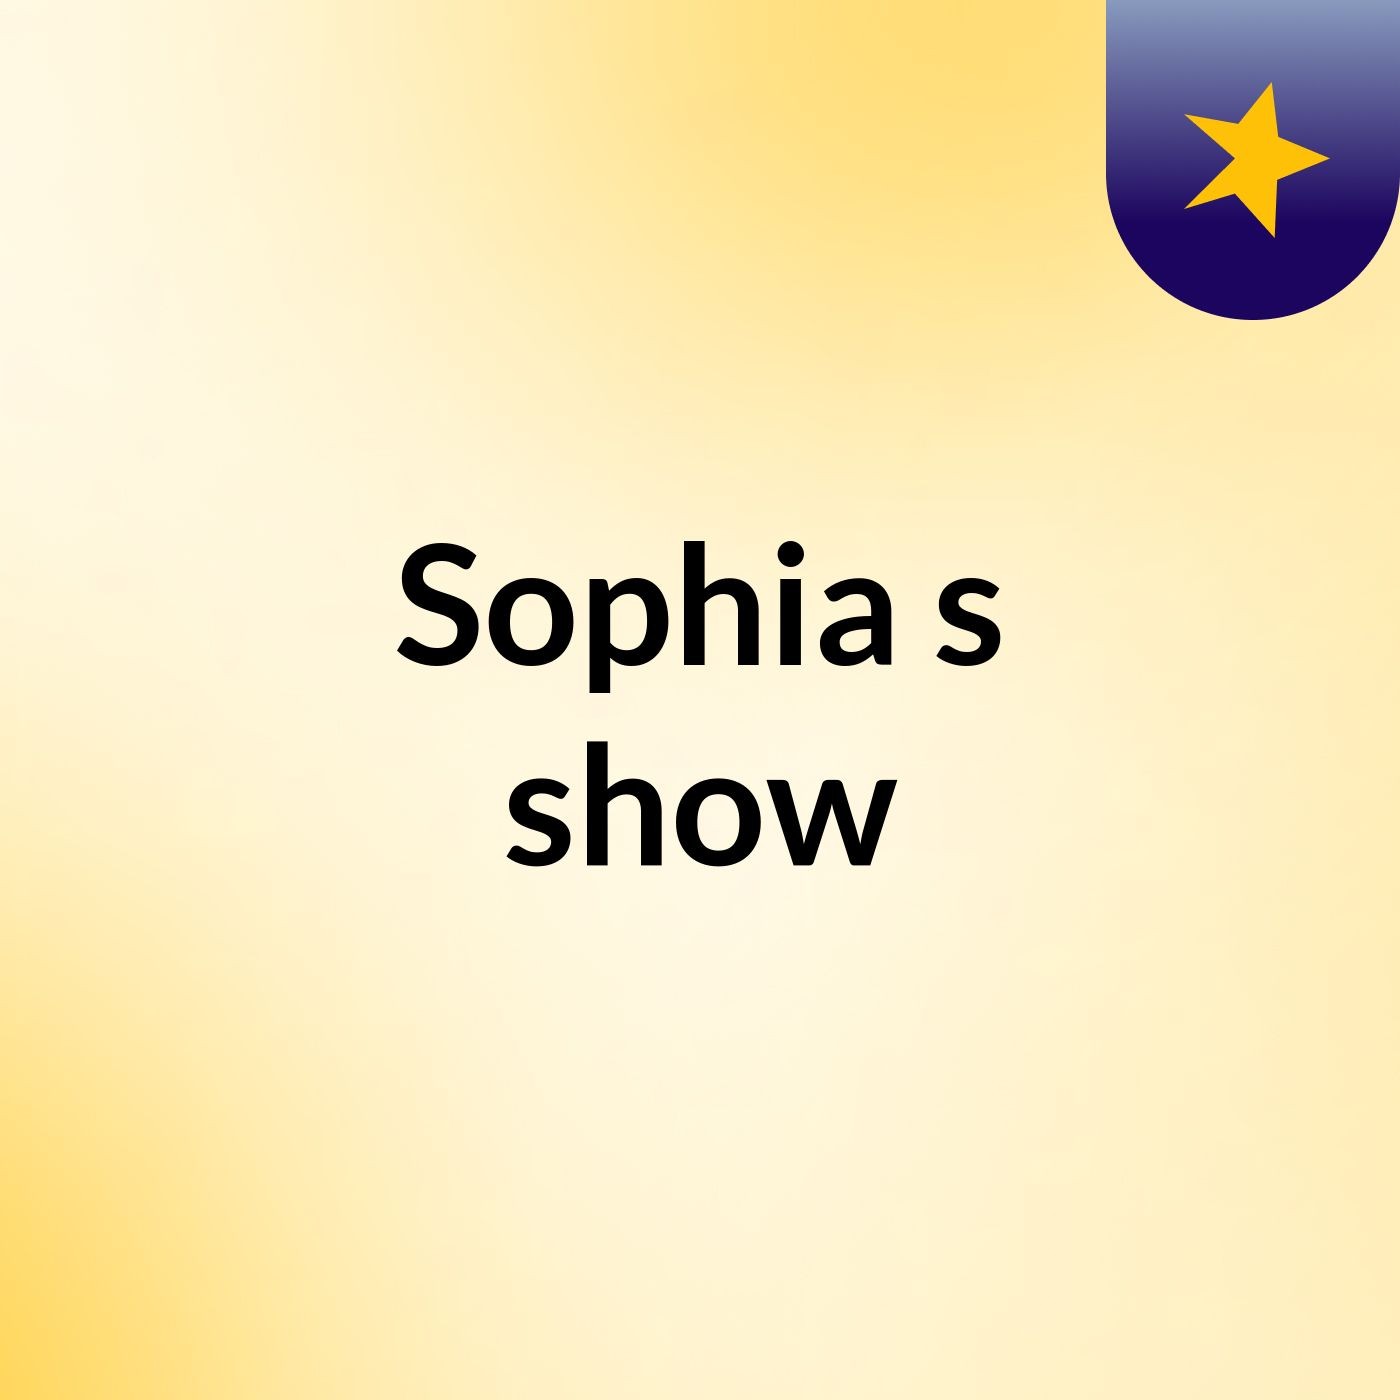 Sophia's show